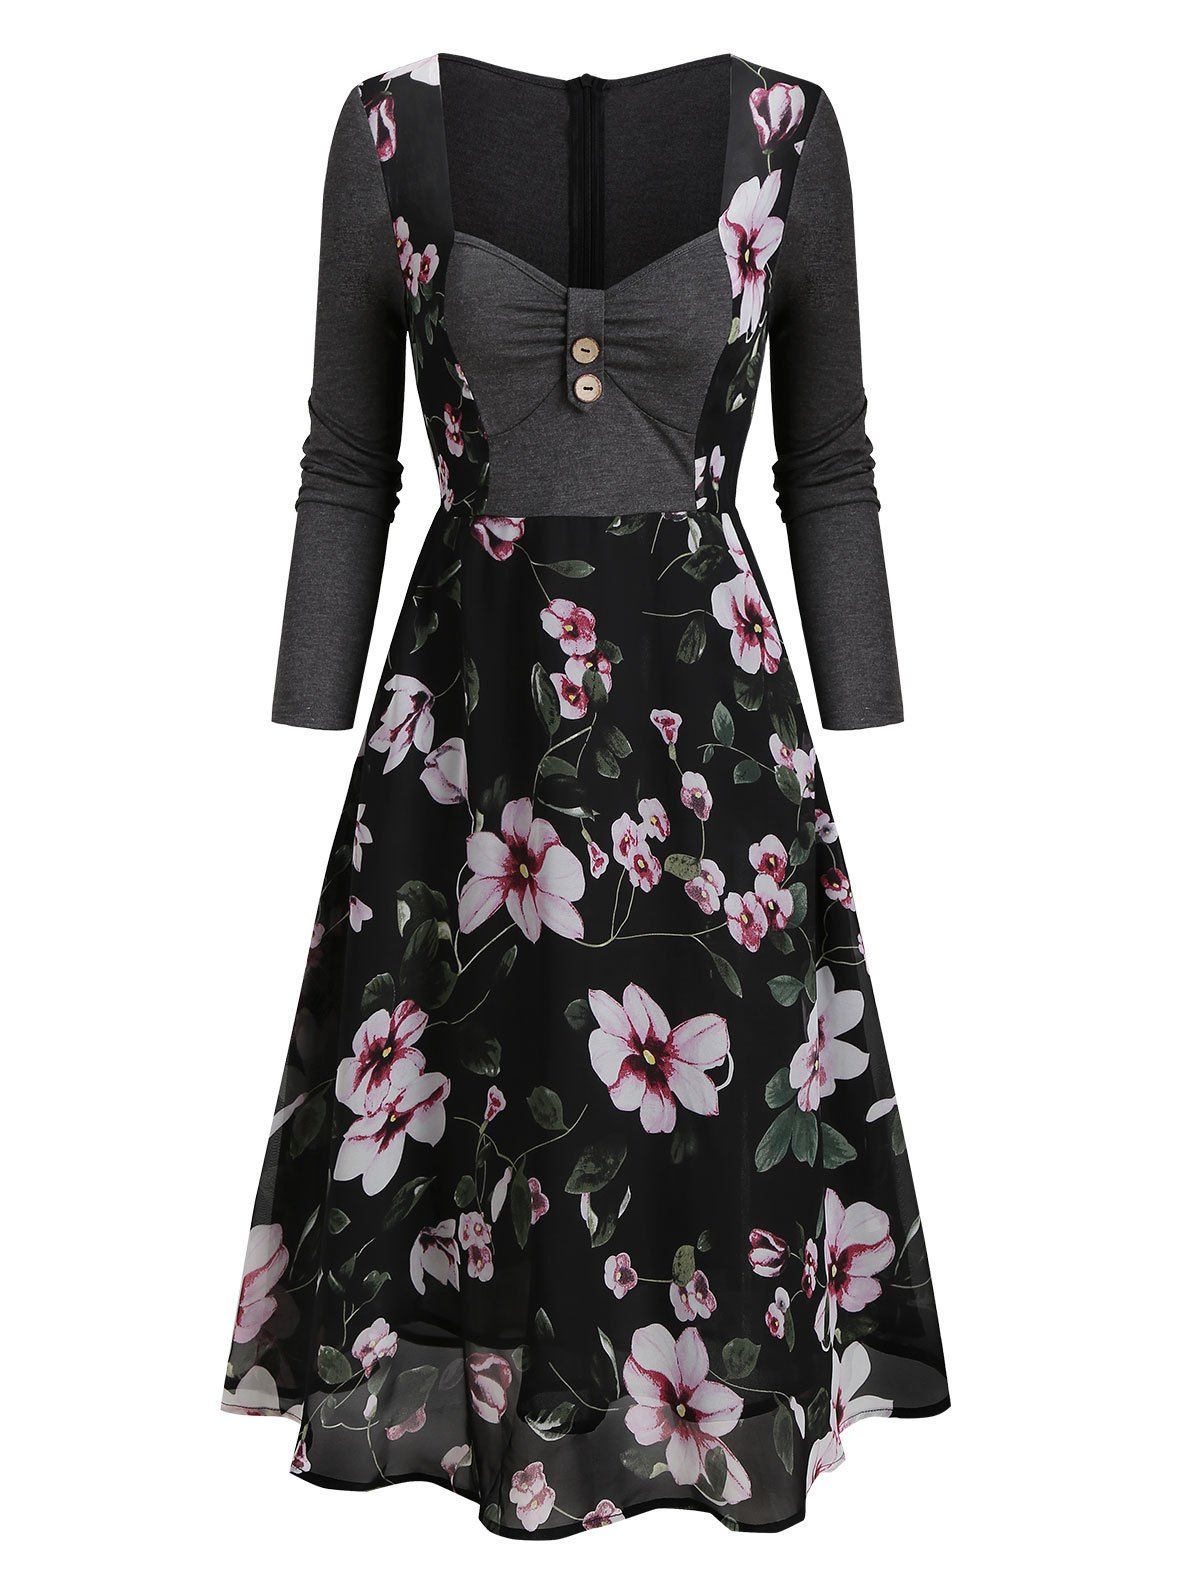 Flower A Line Midi Dress Overlay Mesh High Waist Mock Button Sweetheart Neck Long Sleeve Dress - multicolor A 3XL